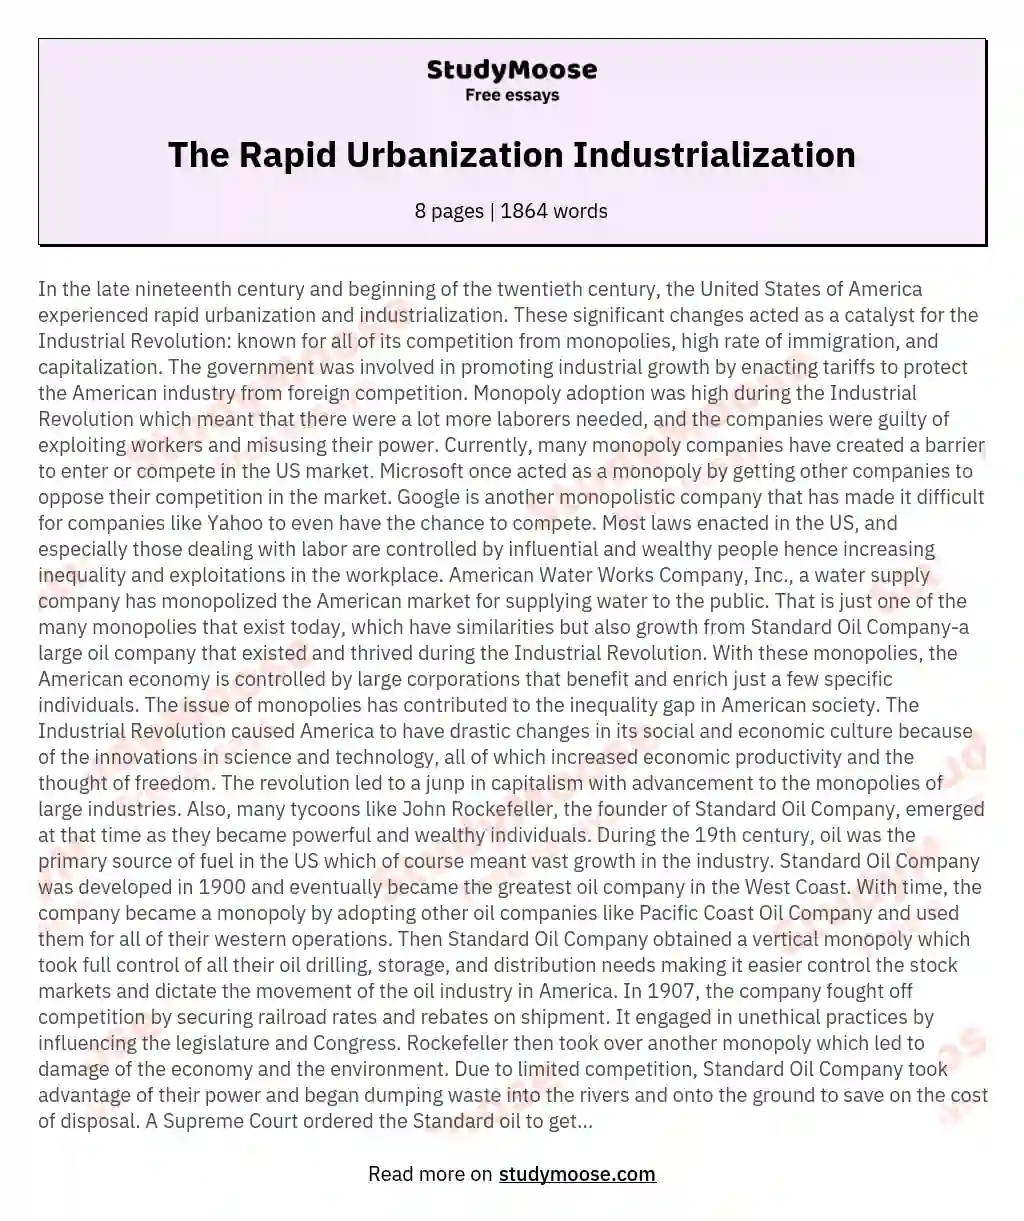 The Rapid Urbanization Industrialization essay